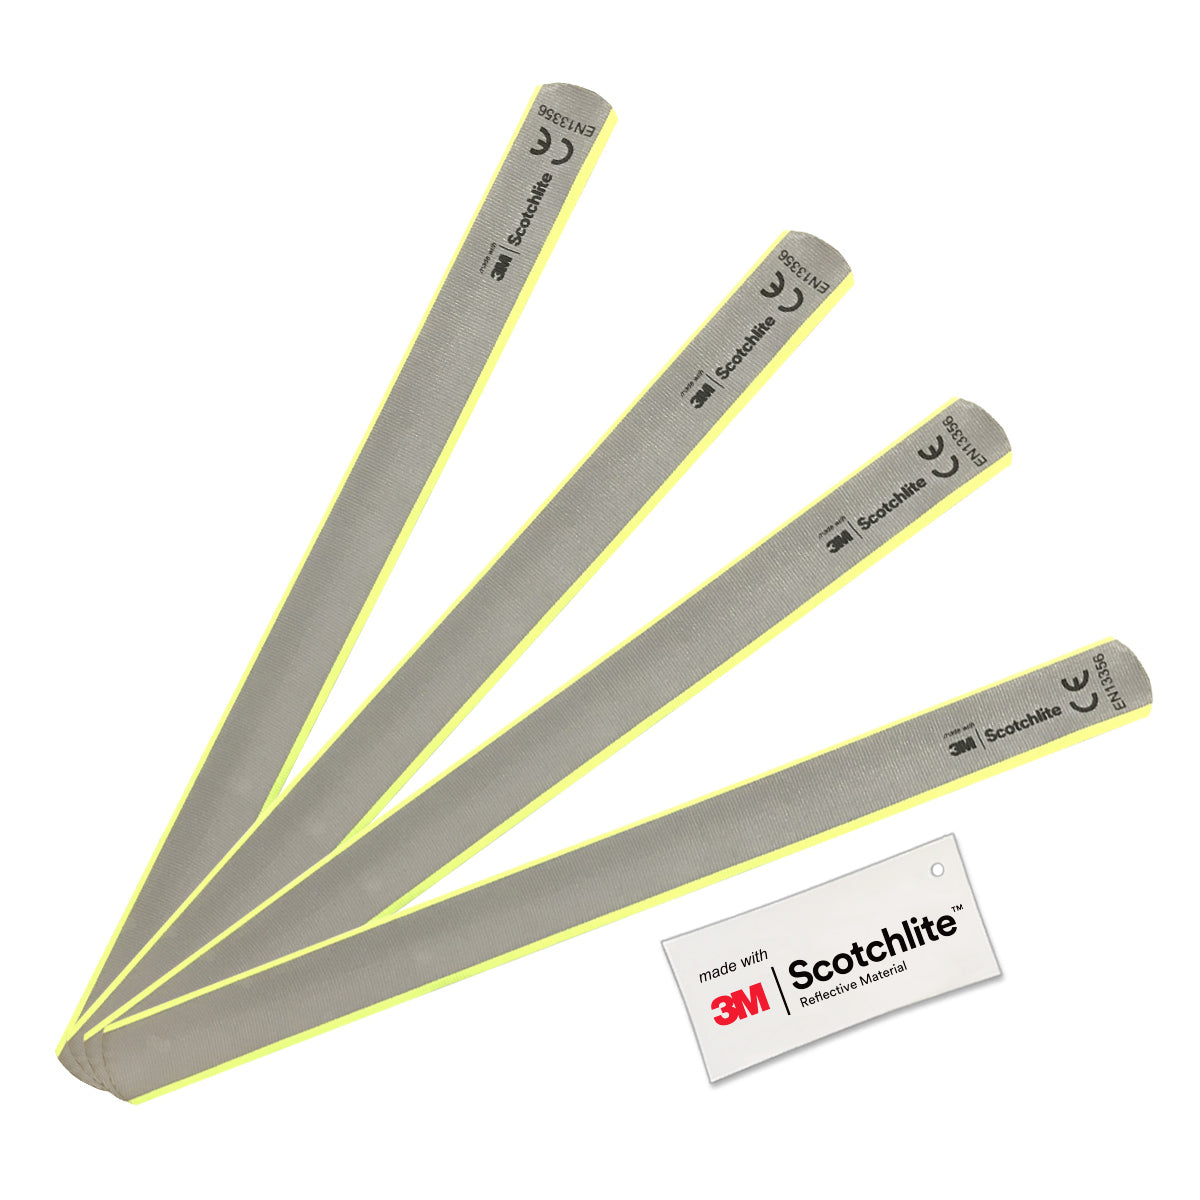 Produktabbildung des grau-gelben Schnapparmband Sets